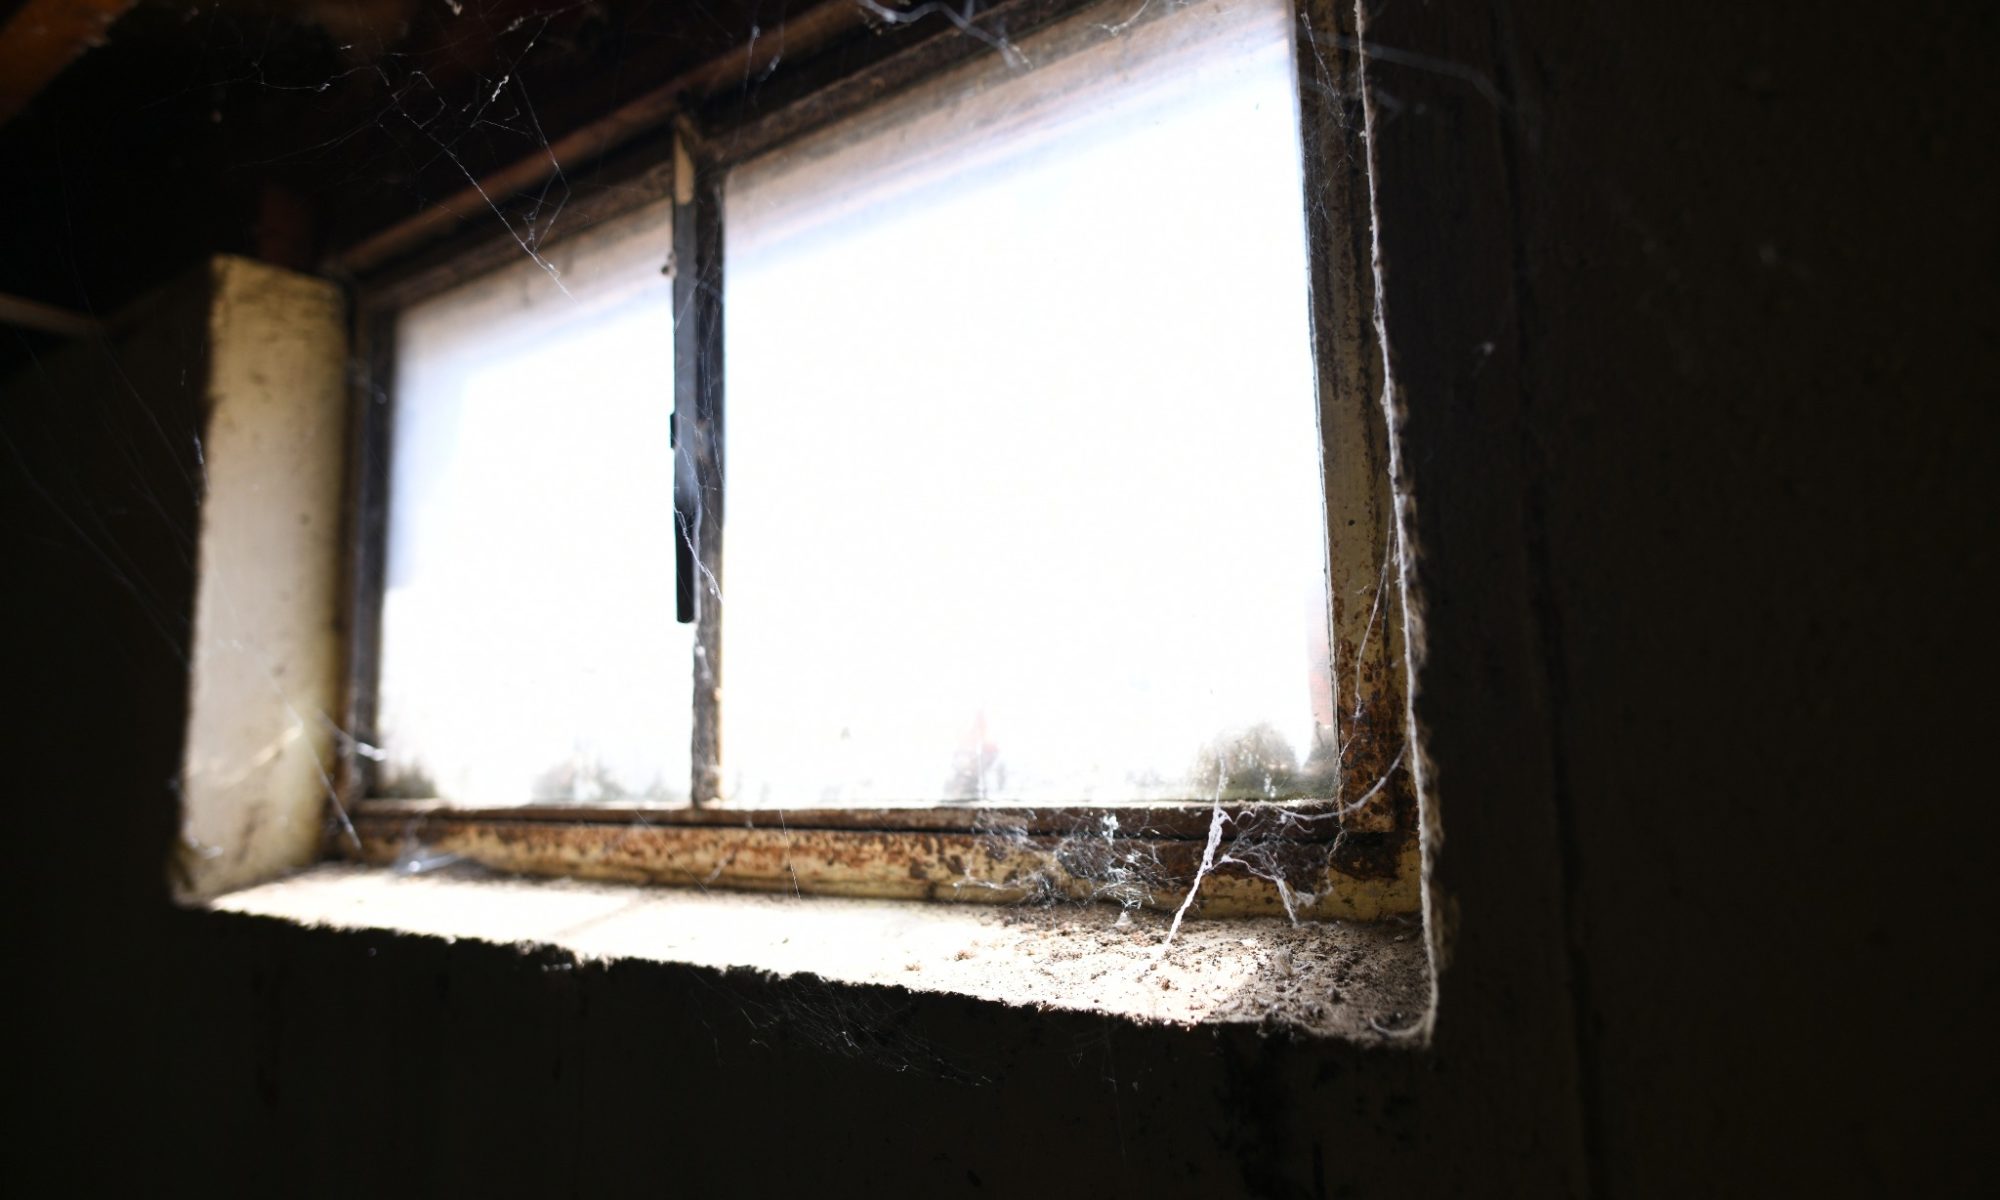 A basement window with cobwebs.